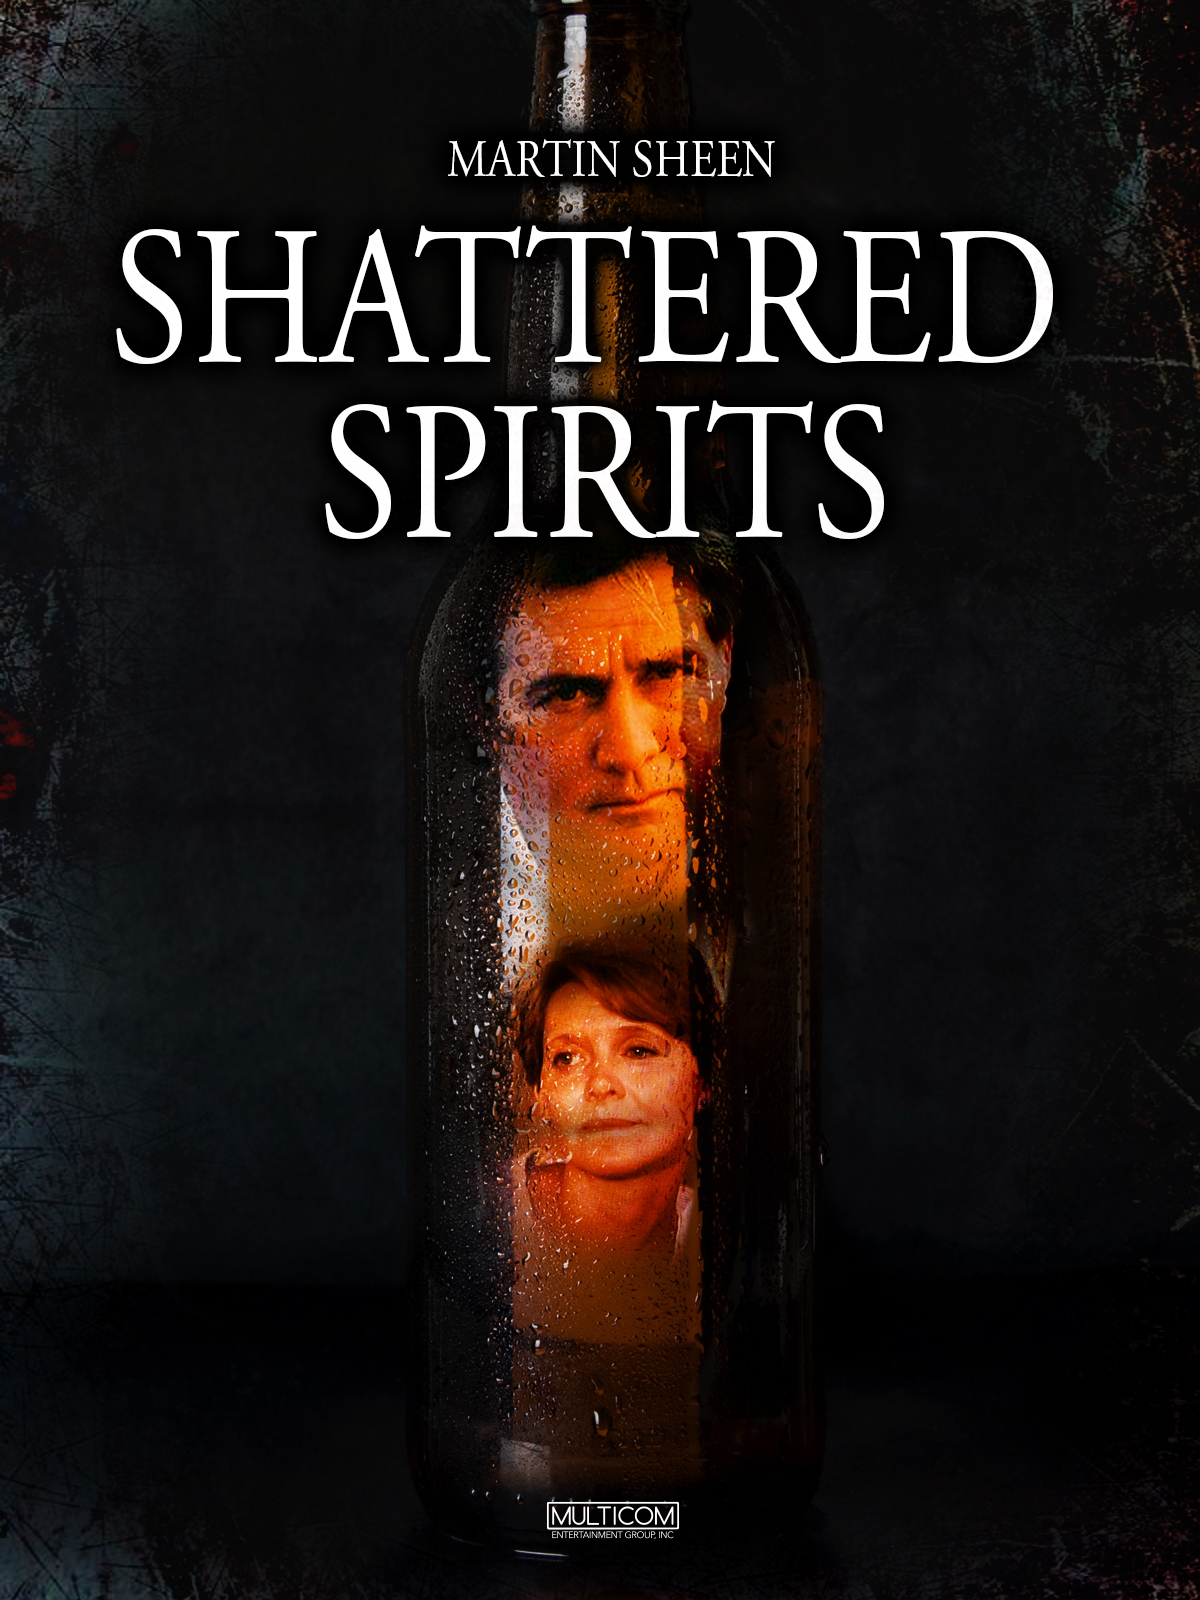 Shattered Spirits (1986) Screenshot 1 